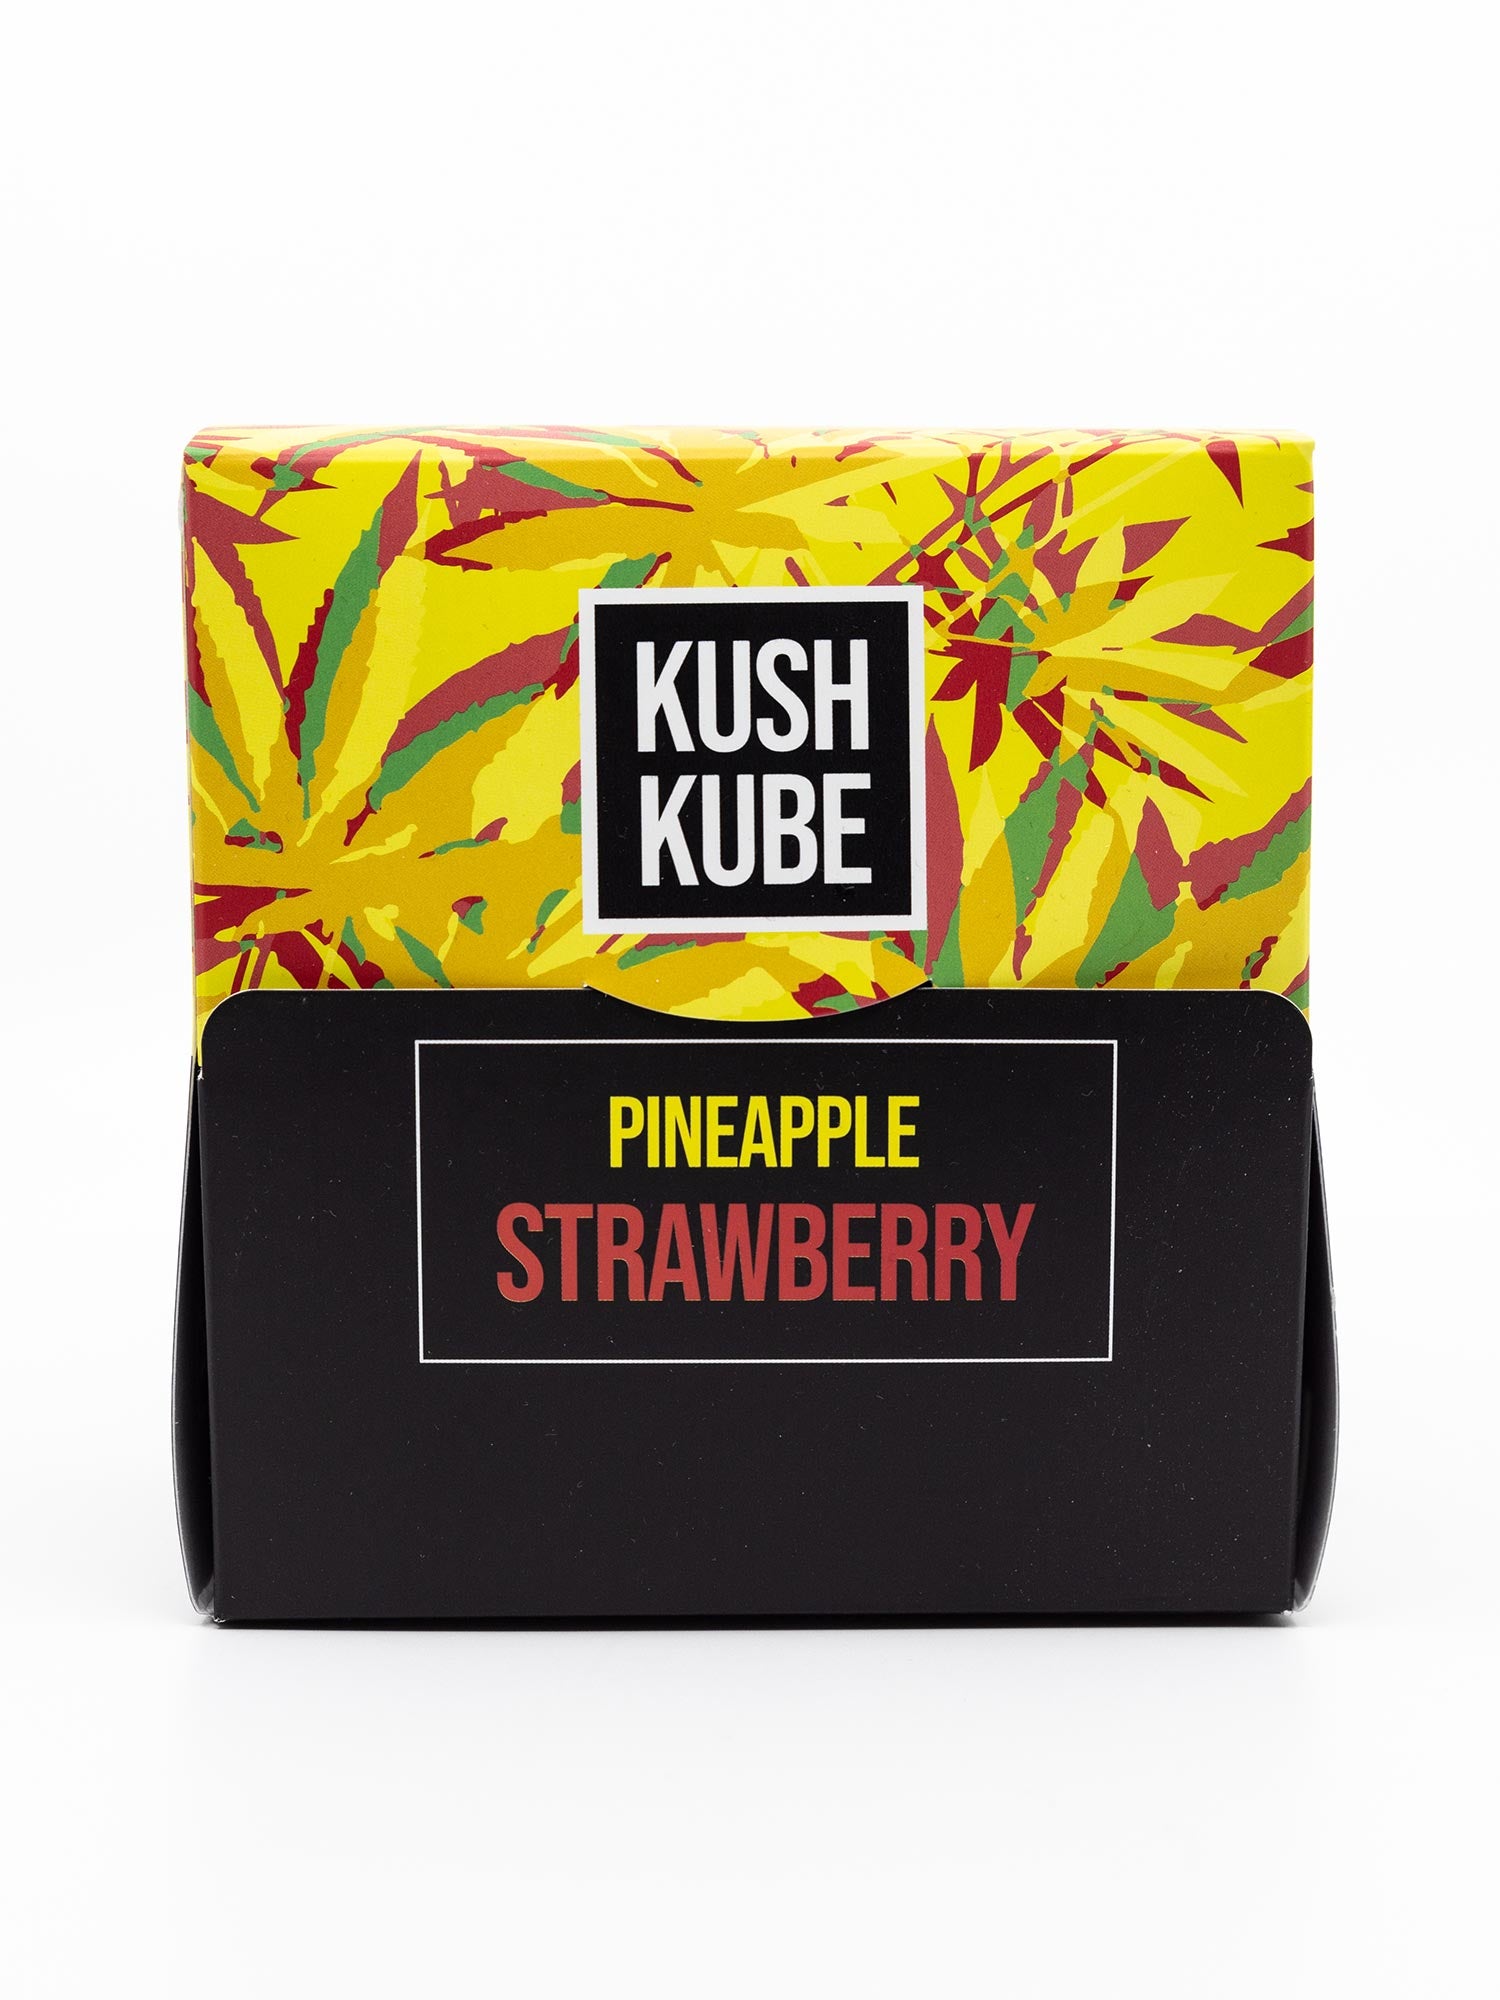 Pineapple Strawberry -  30 - 2 Pack Box